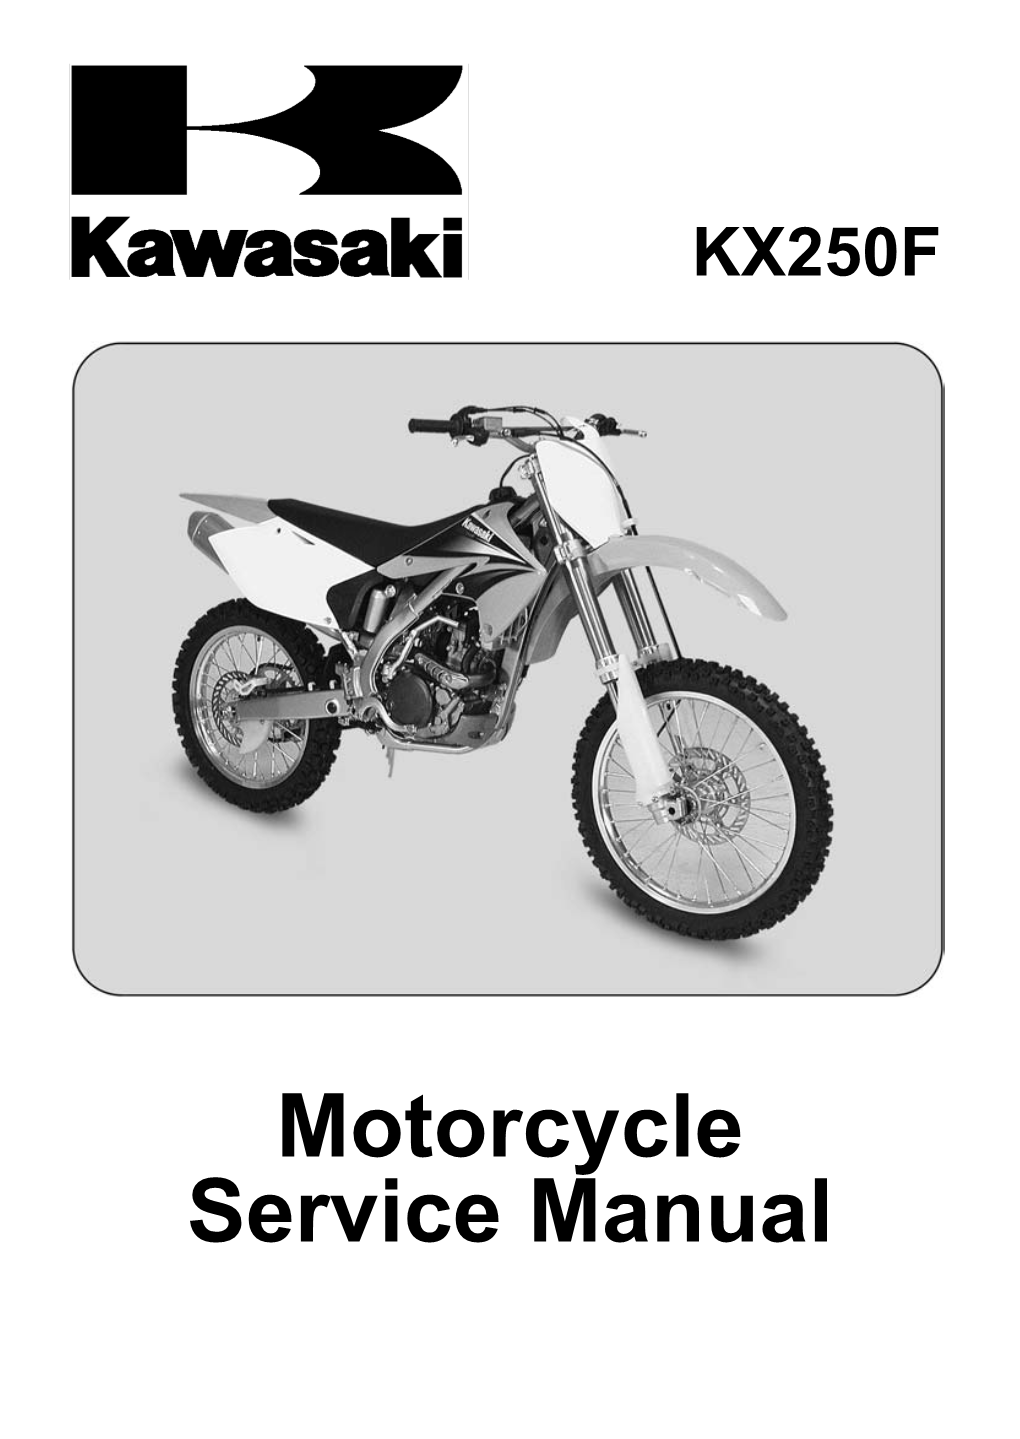 KX250F Motorcycle Service Manual